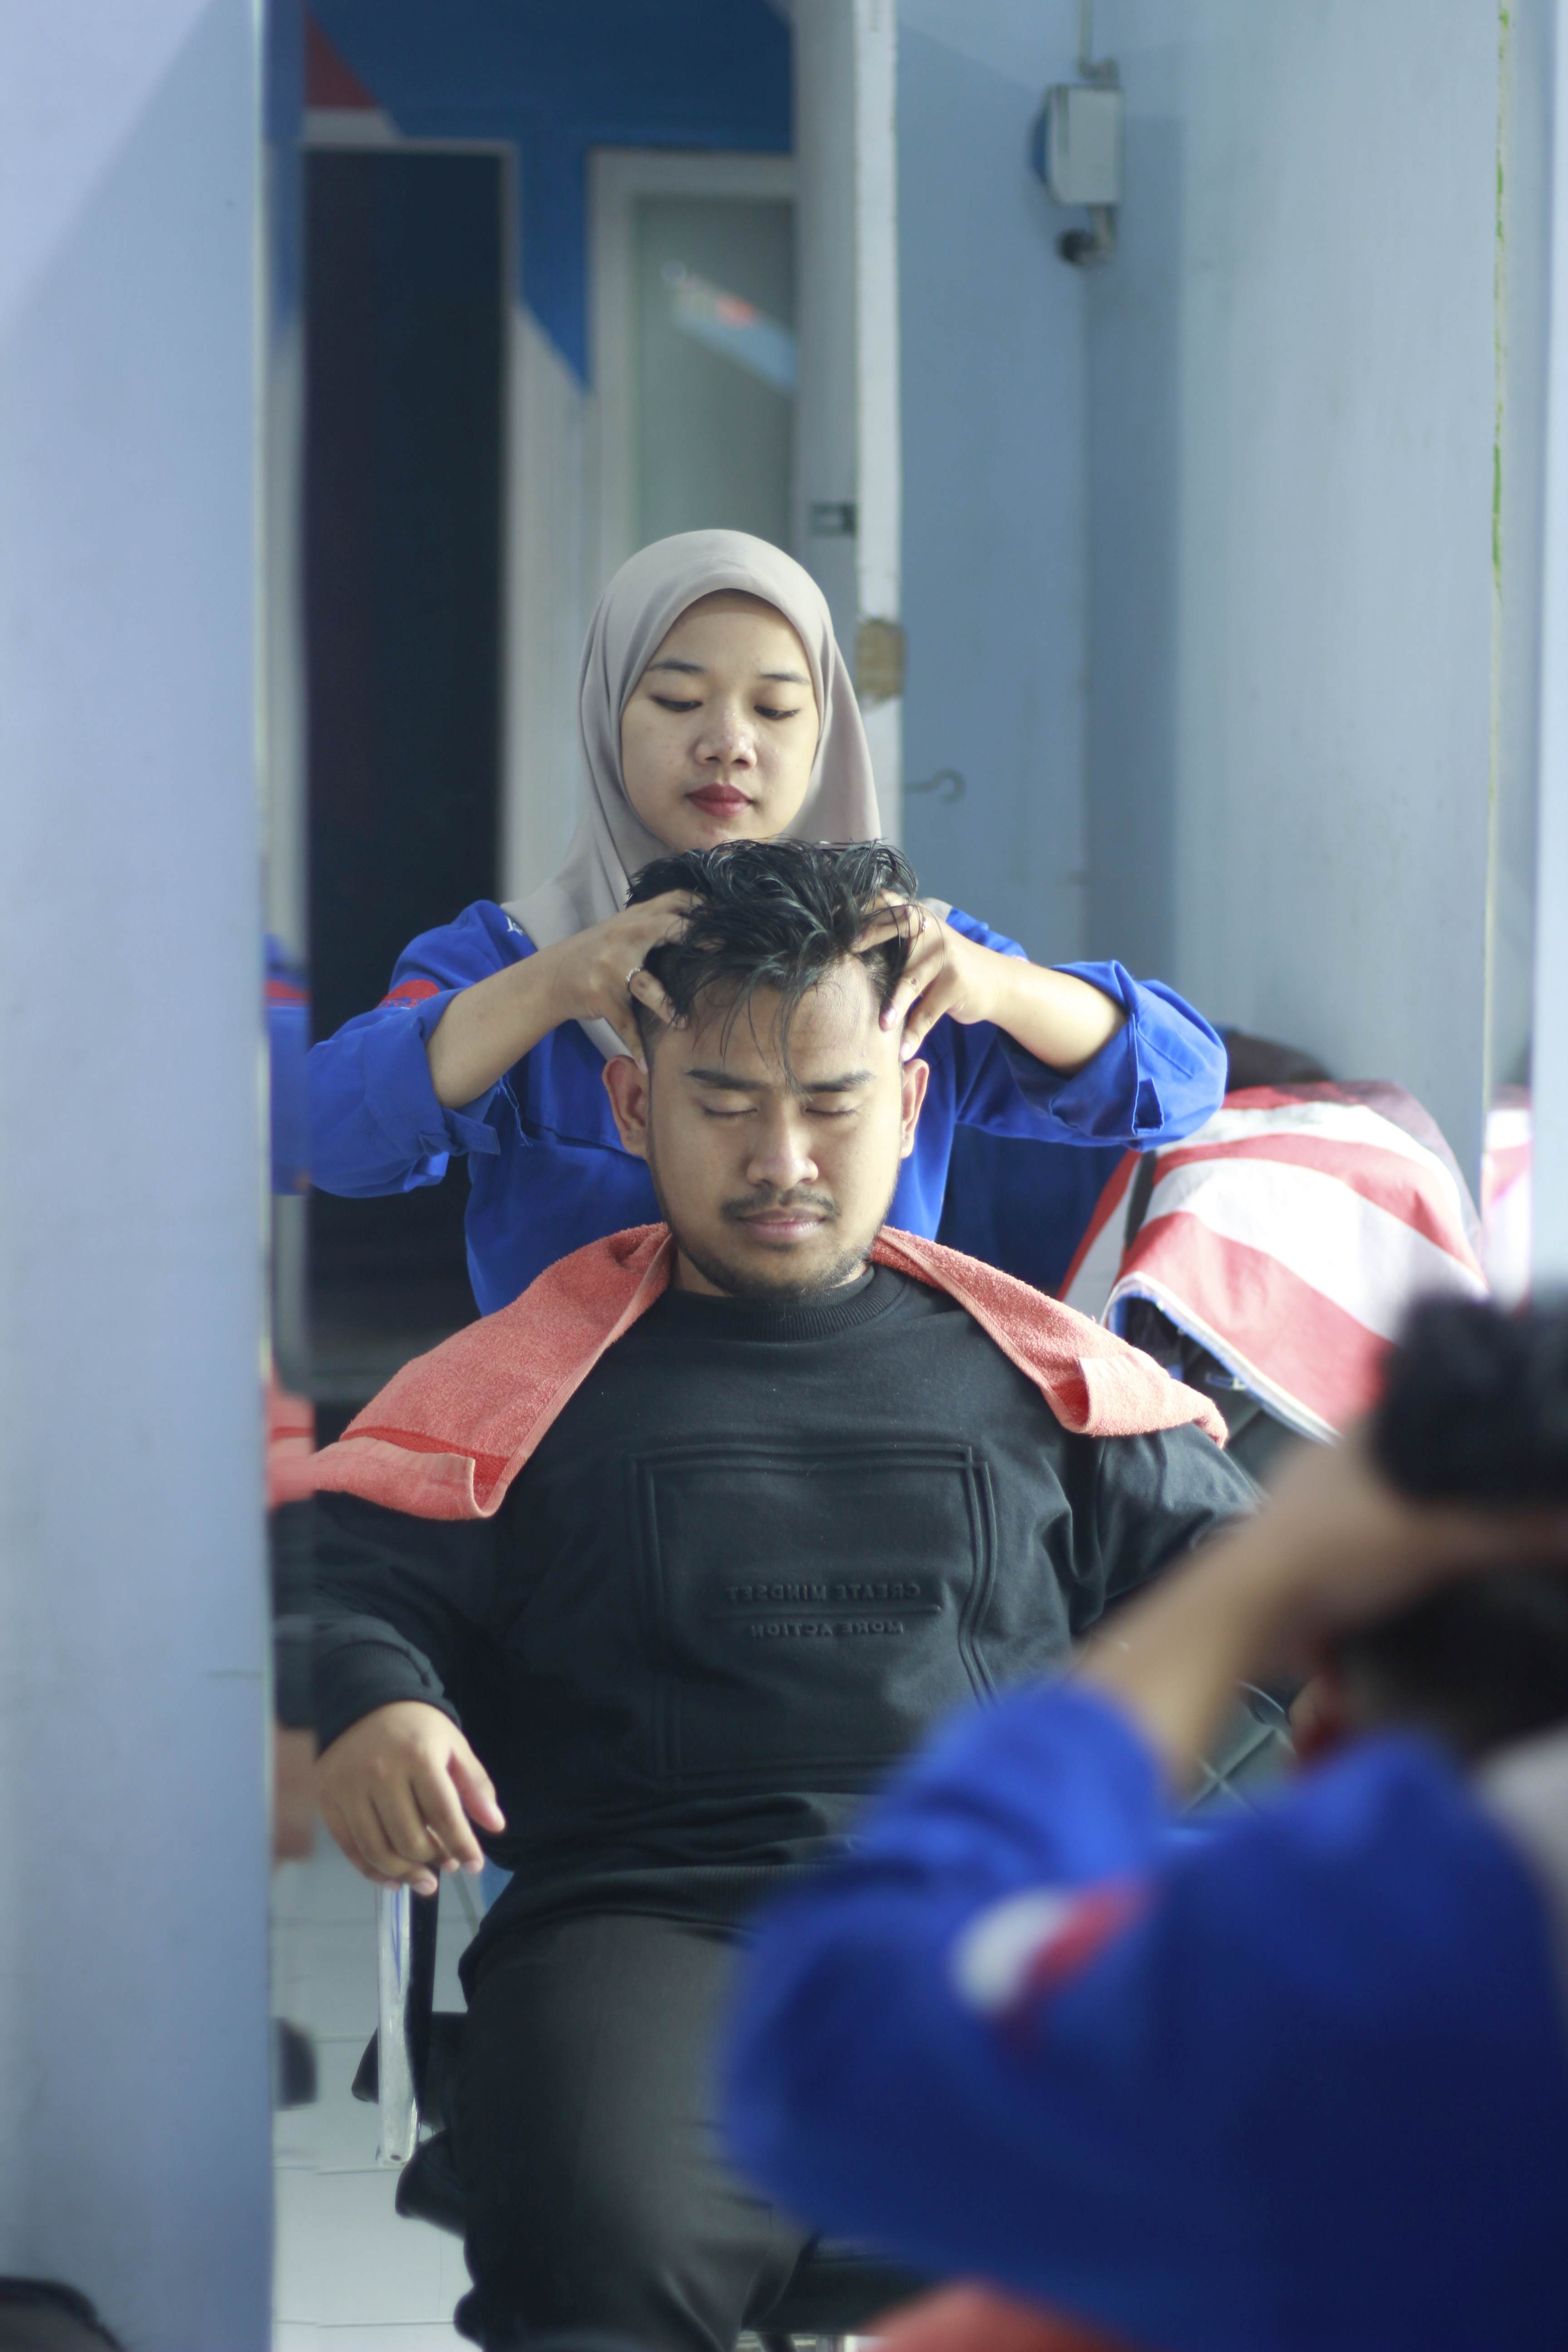 Harga Cukur Rambut Di Kecamatan Sukun Murah